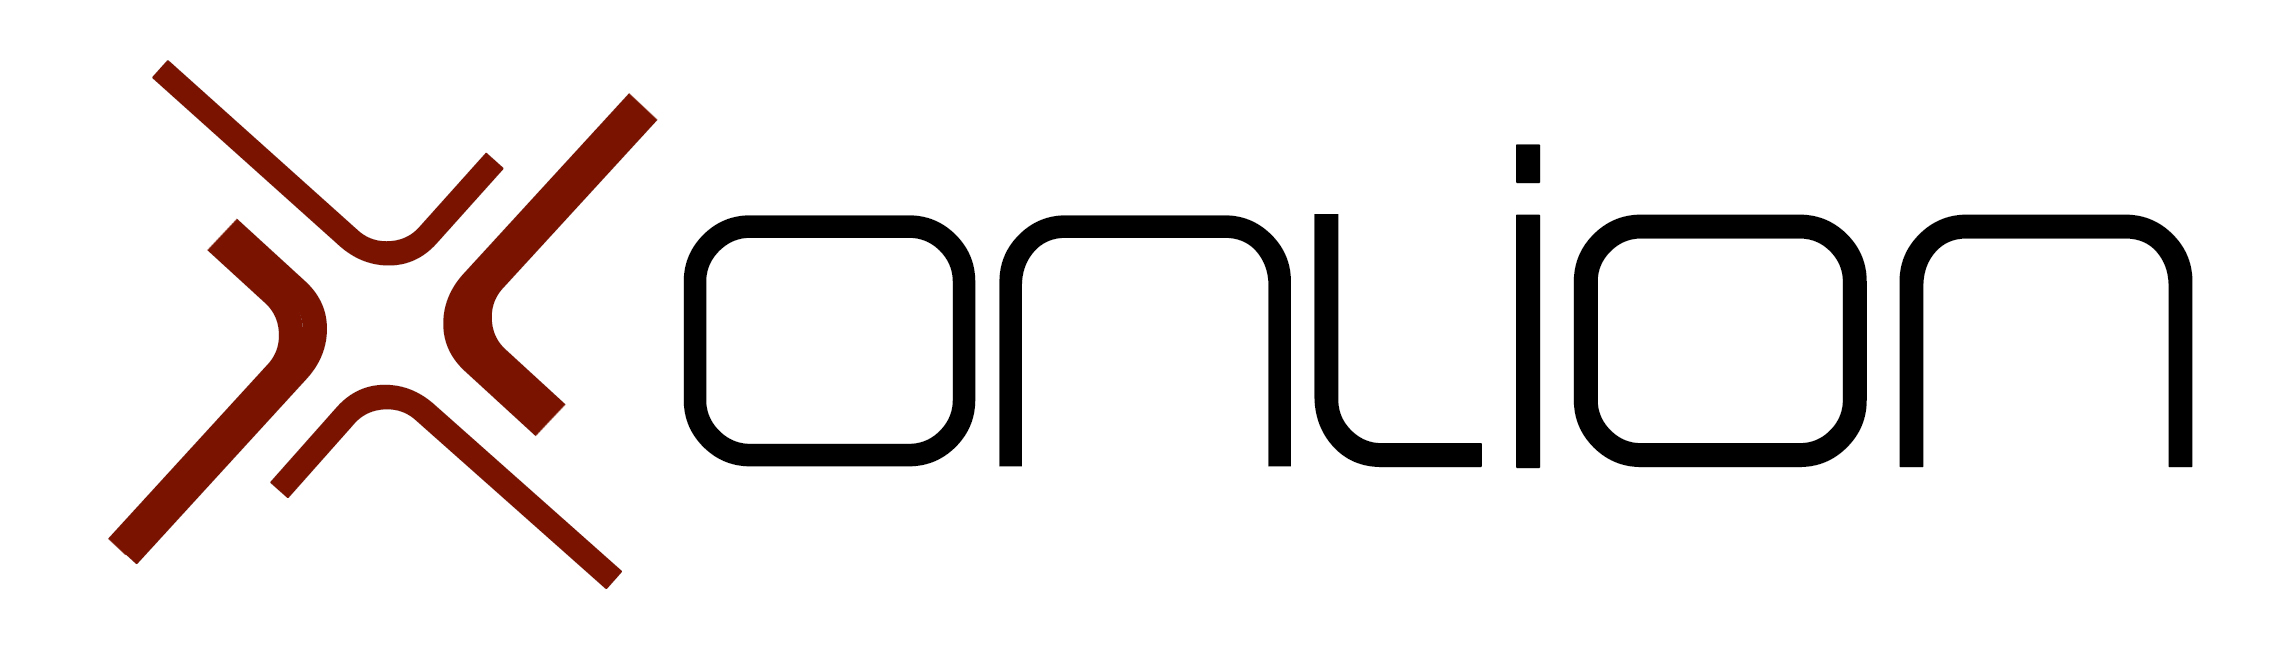 Onlion logo.jpg